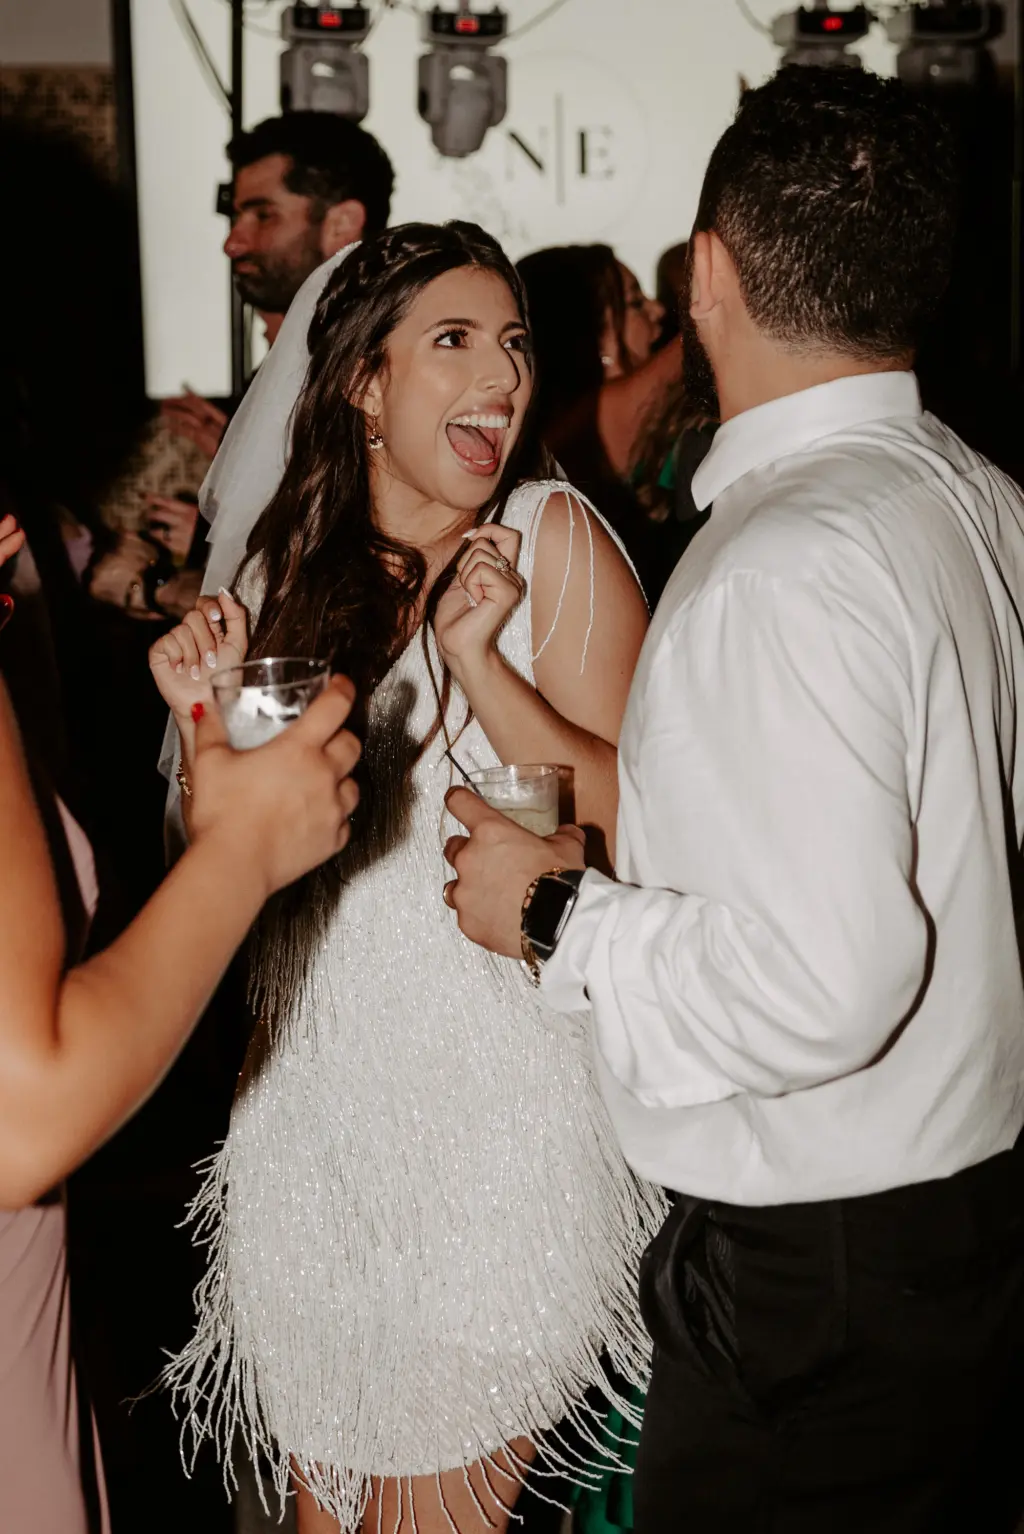 White Boho Fringe Dress for Wedding Reception Grand Exit | Tampa Bay DJ Breezin Entertainment